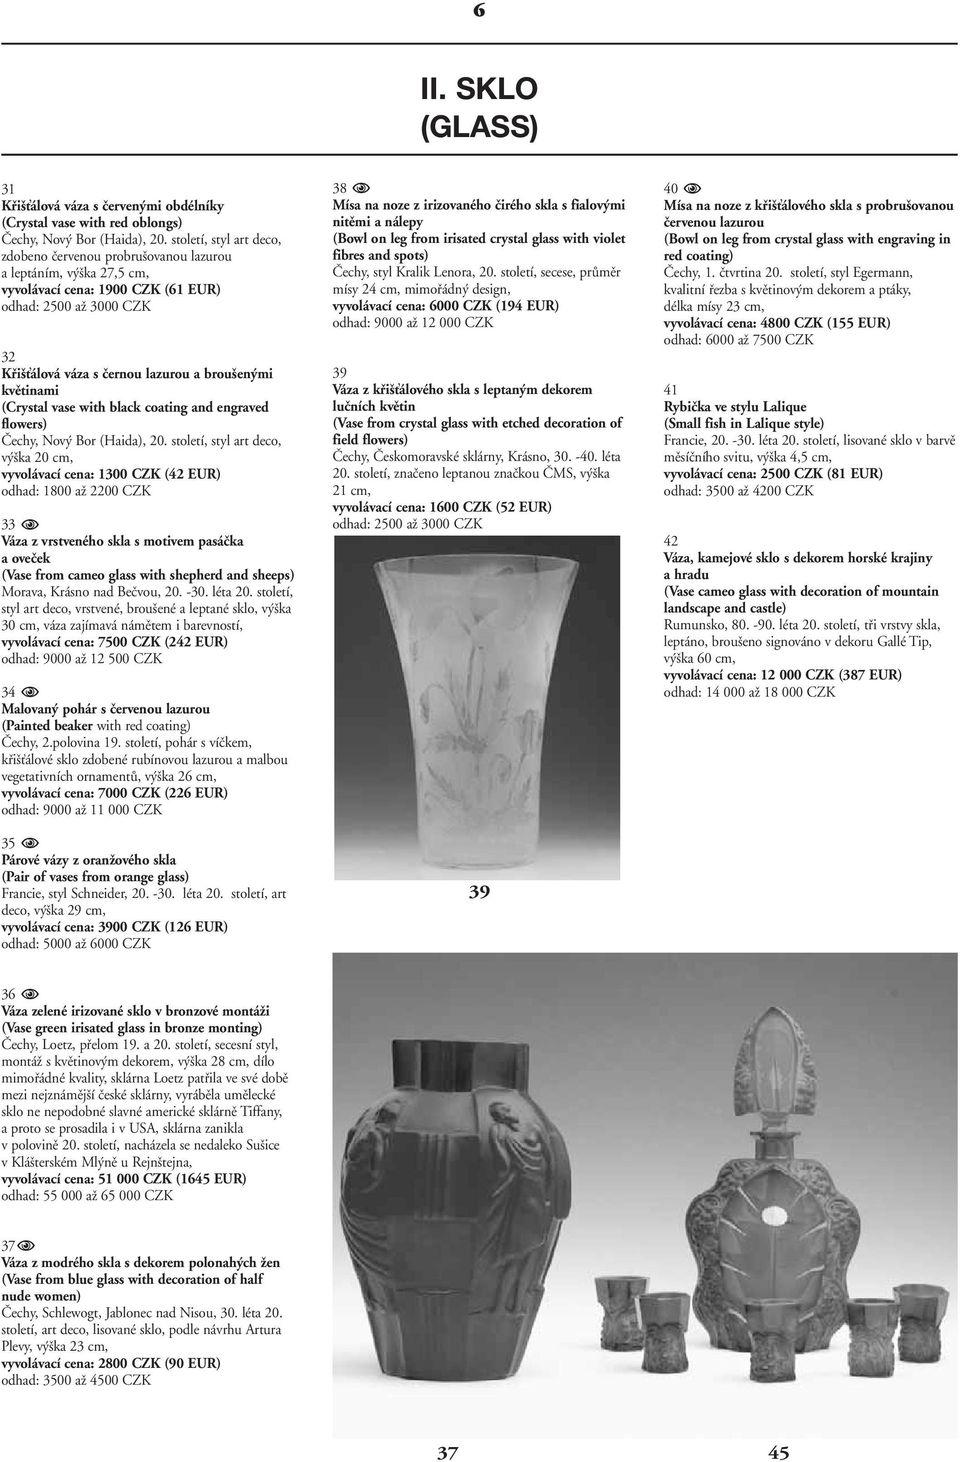 kvûtinami (Crystal vase with black coating and engraved flowers) âechy, Nov Bor (Haida), 20.